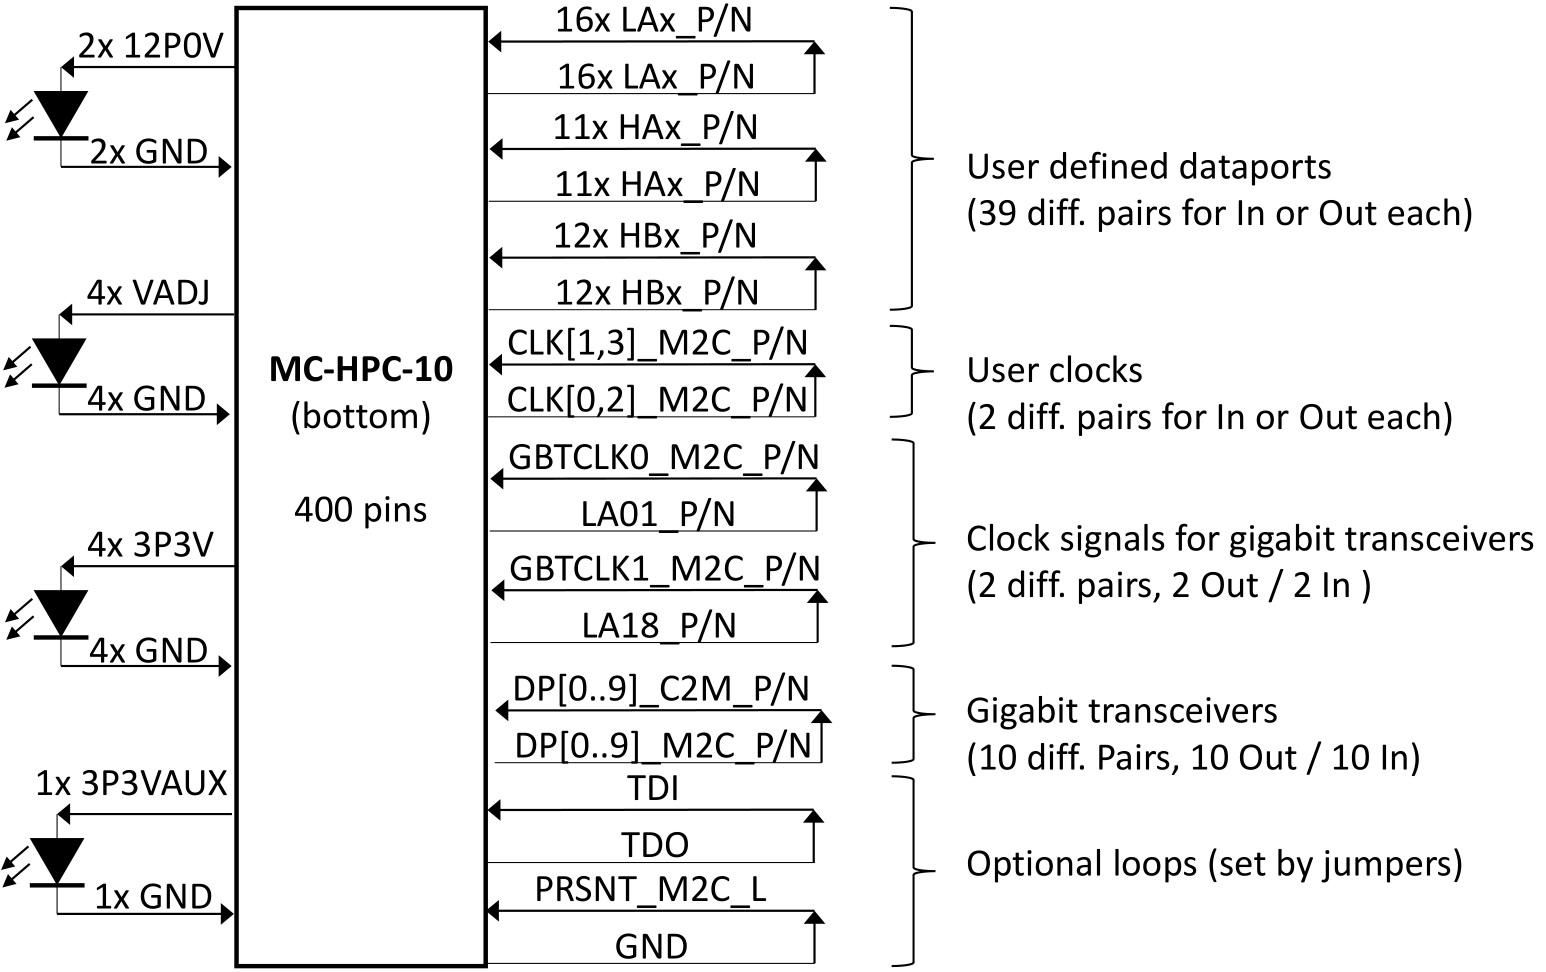 FMC Loopback module, Block diagram for HPC pins (all pins)